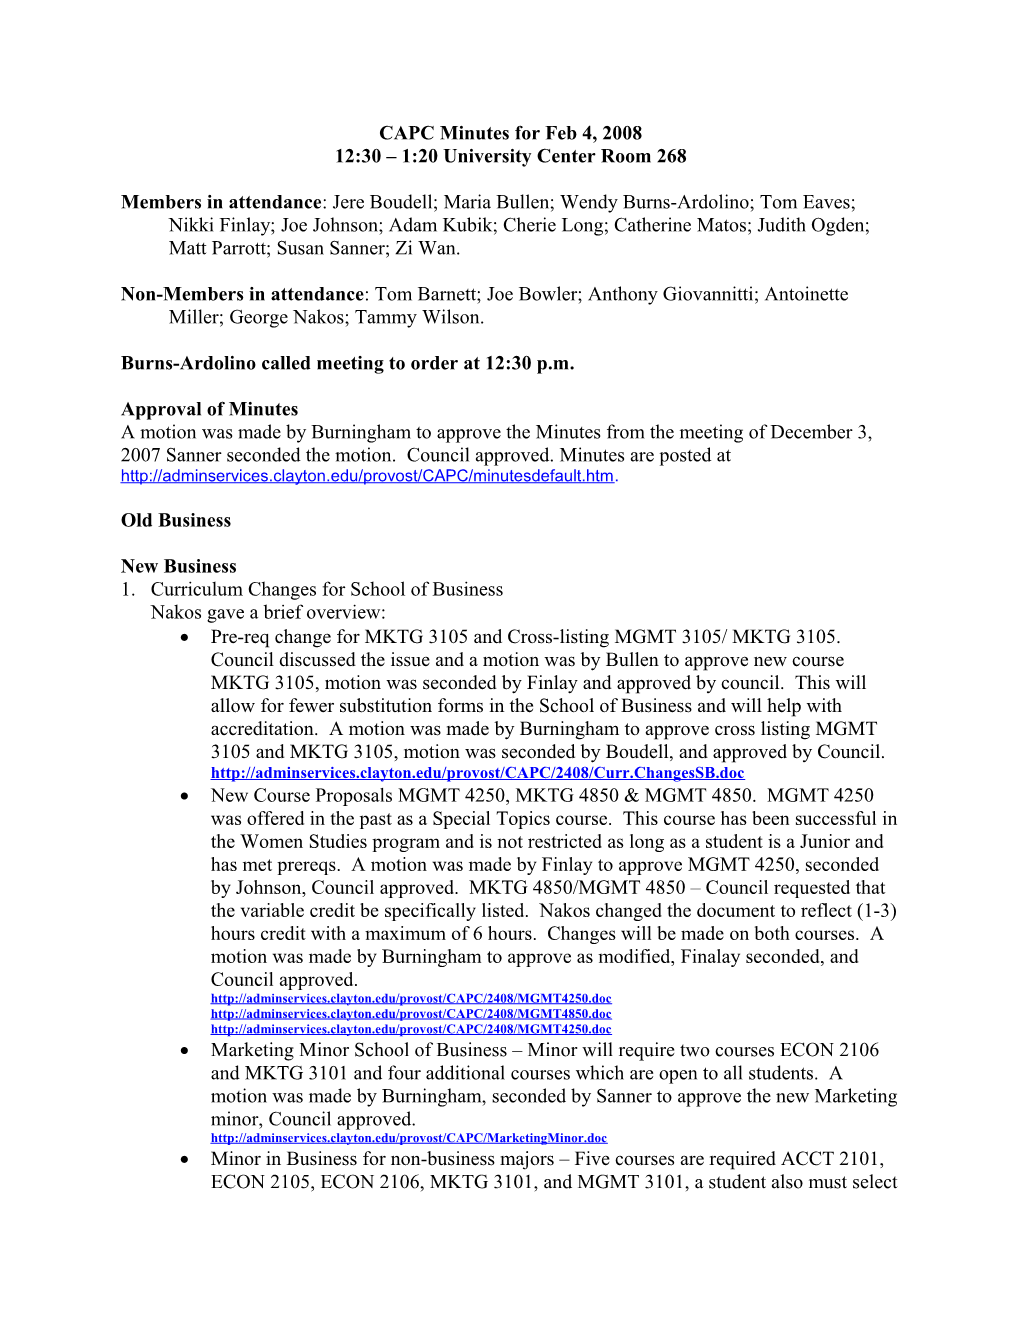 CAPC Agenda for August 14, 2007